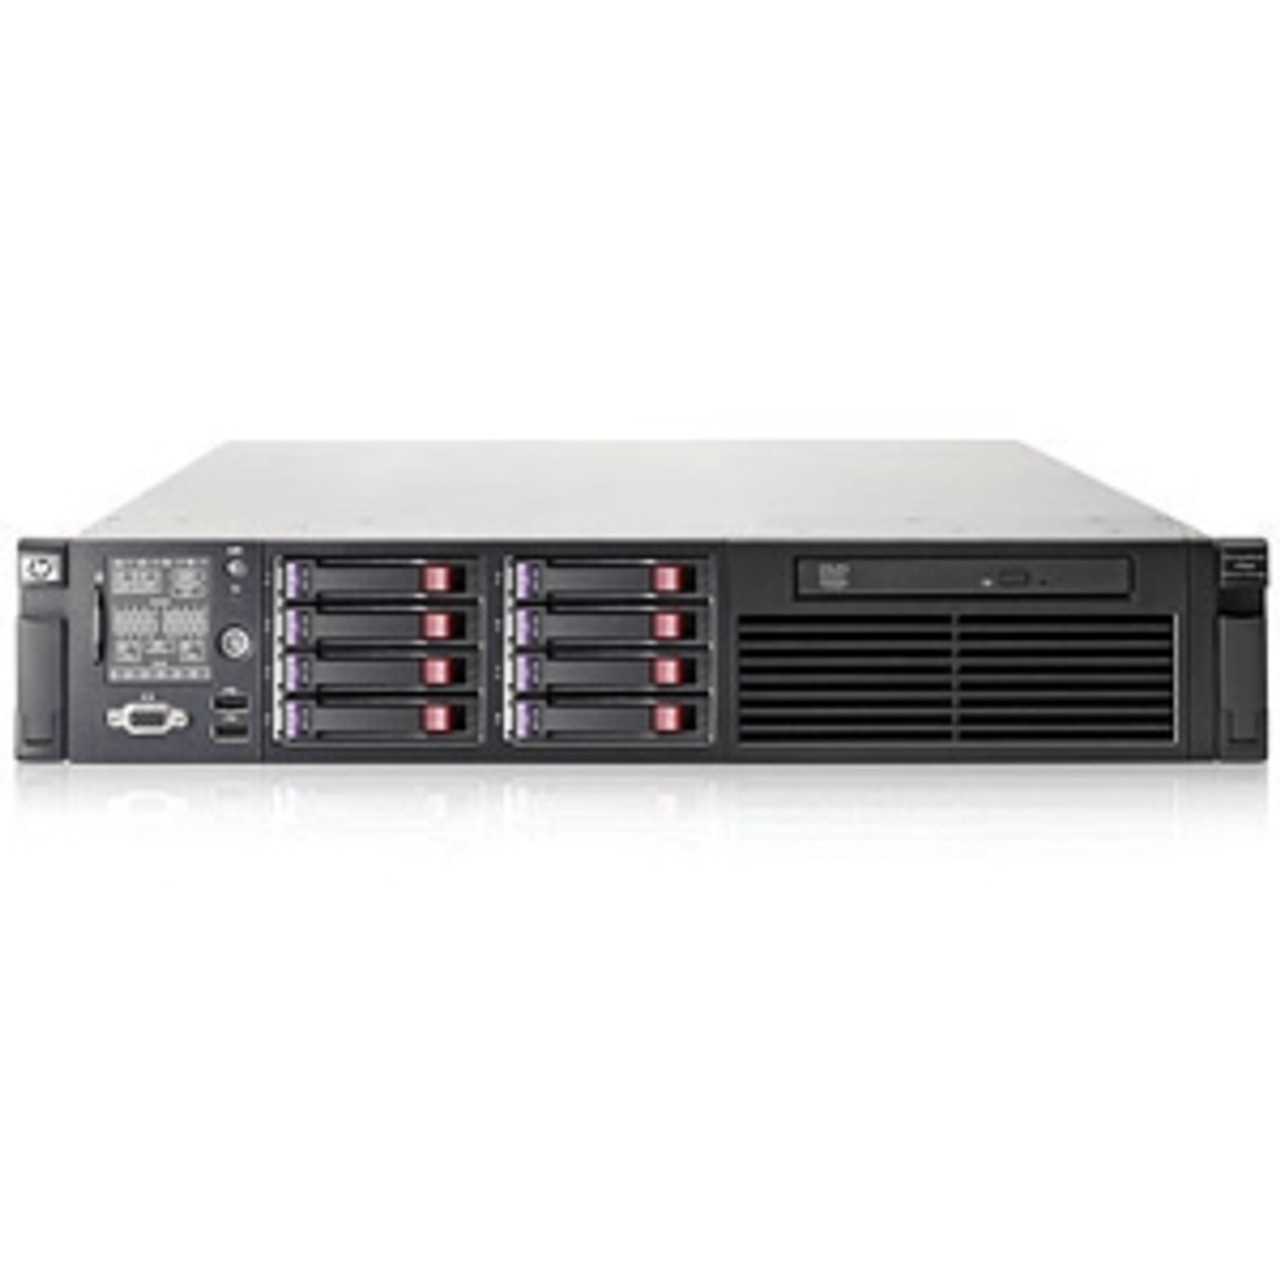 BV868A - HP StorageWorks X1800 G2 Network Storage Server 1 x Intel Xeon E5640 2.66 GHz 292 GB (2 x 146 GB) Type A USB RJ-45 Network Serial Mini-DIN Mouse Mini-DIN Keyboard Video